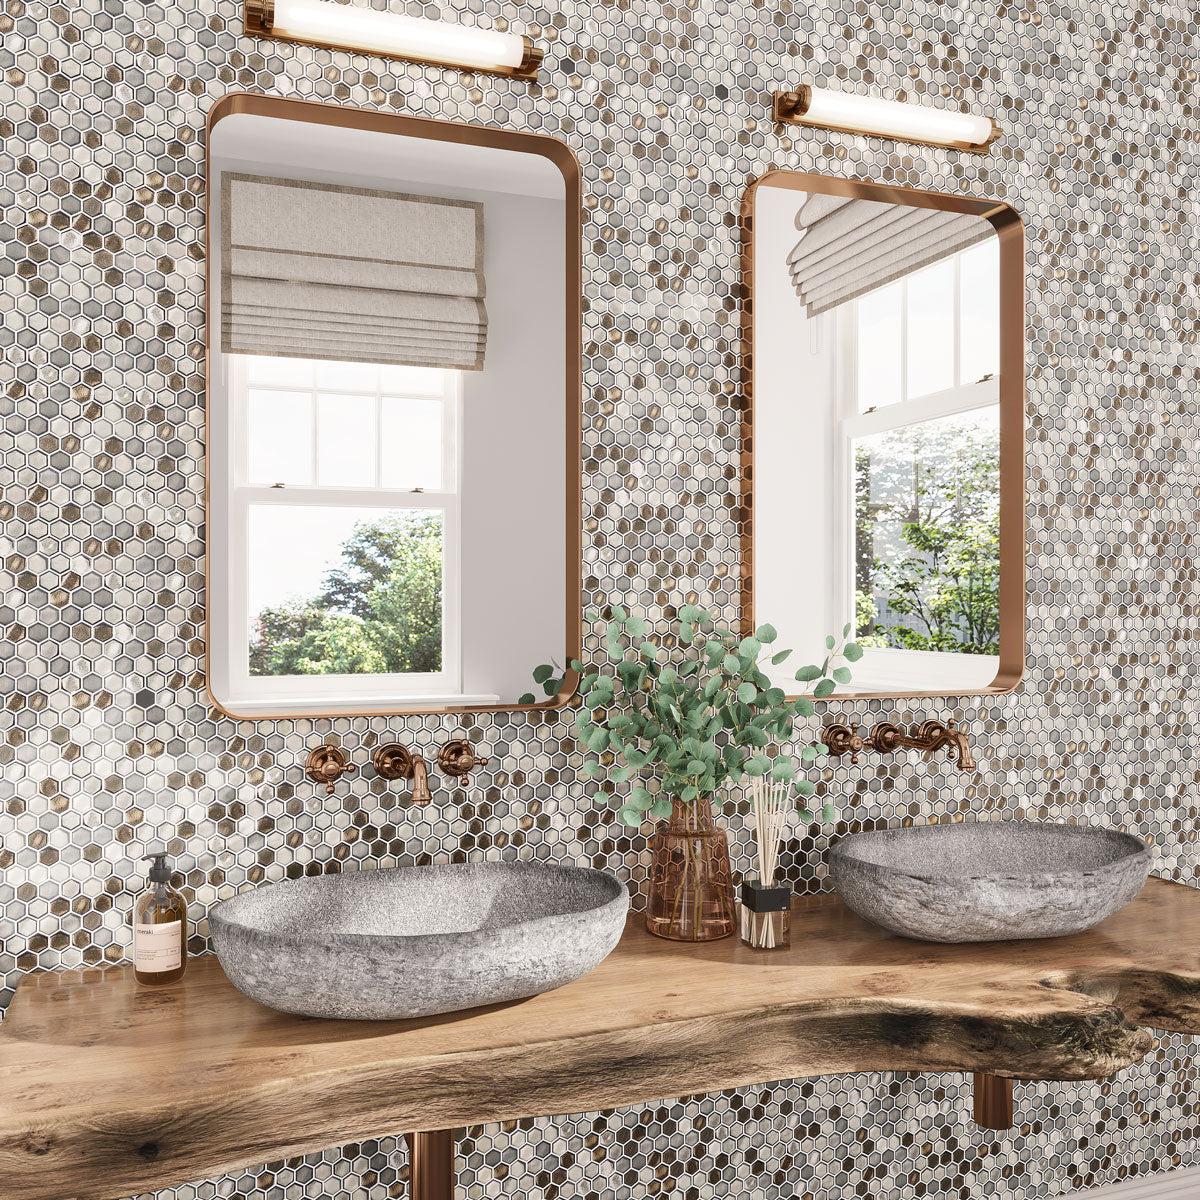 Modern organic bathroom with gray and metallic hexagon glass tiles with a live edge wood countertop